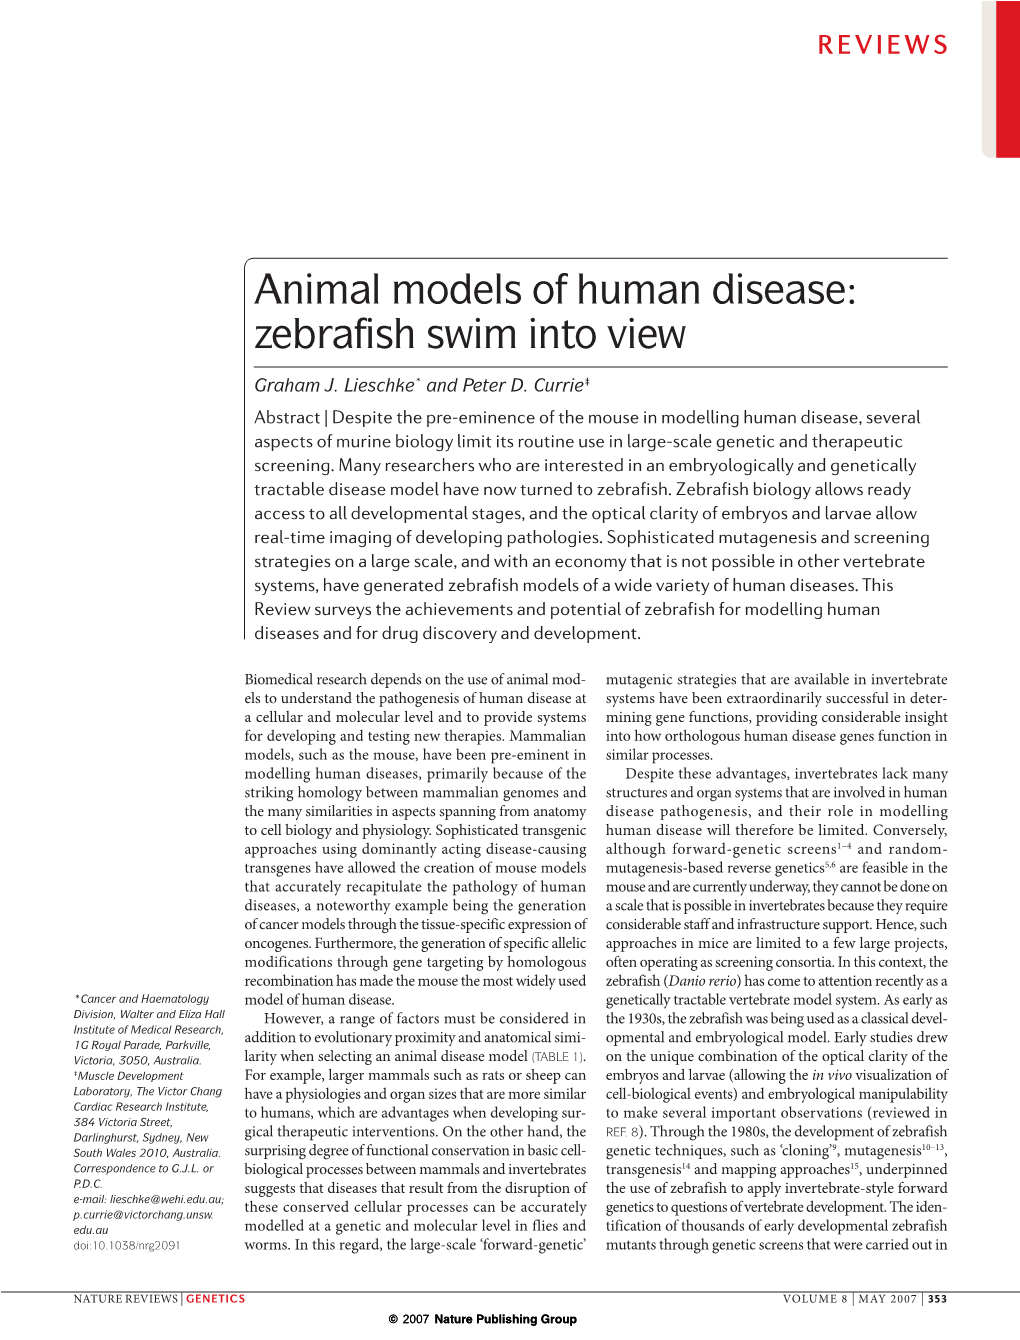 Animal Models of Human Disease: Zebrafish Swim Into View